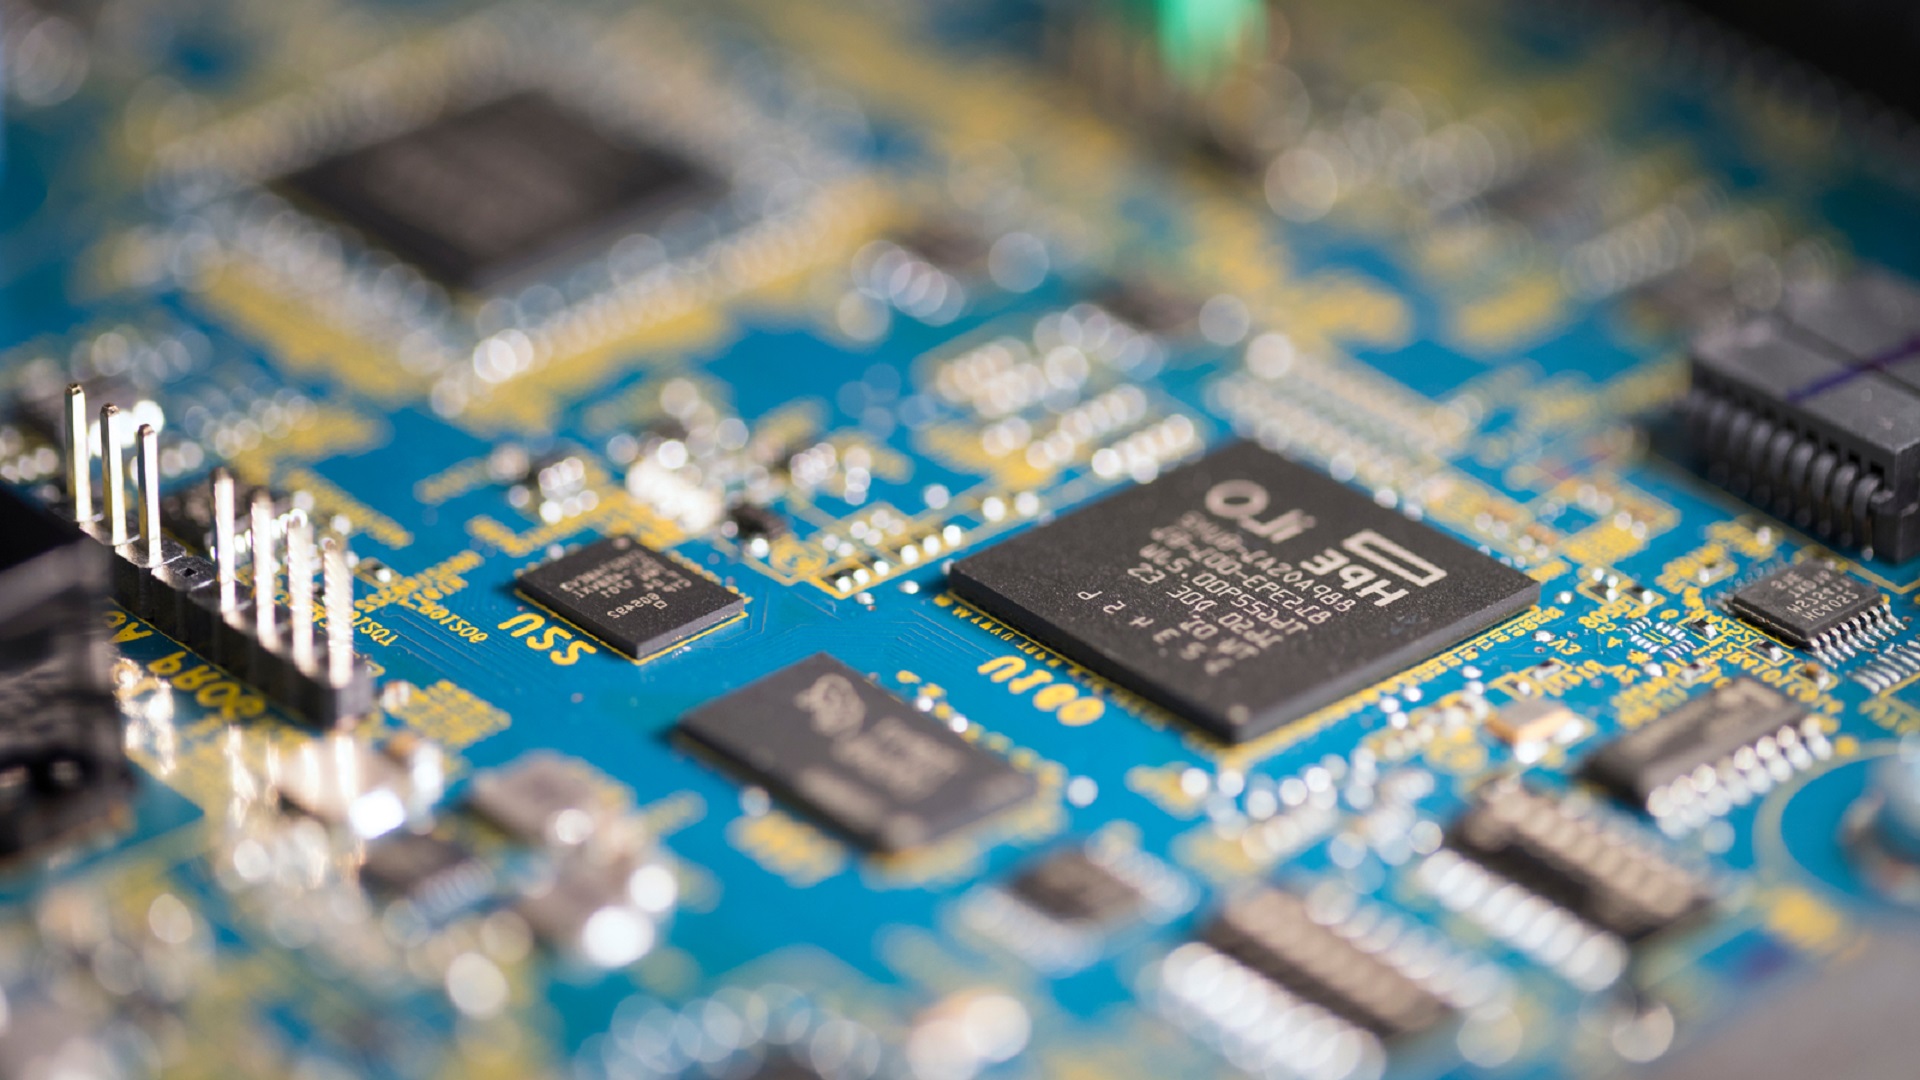 Close-up of a server iLO chip